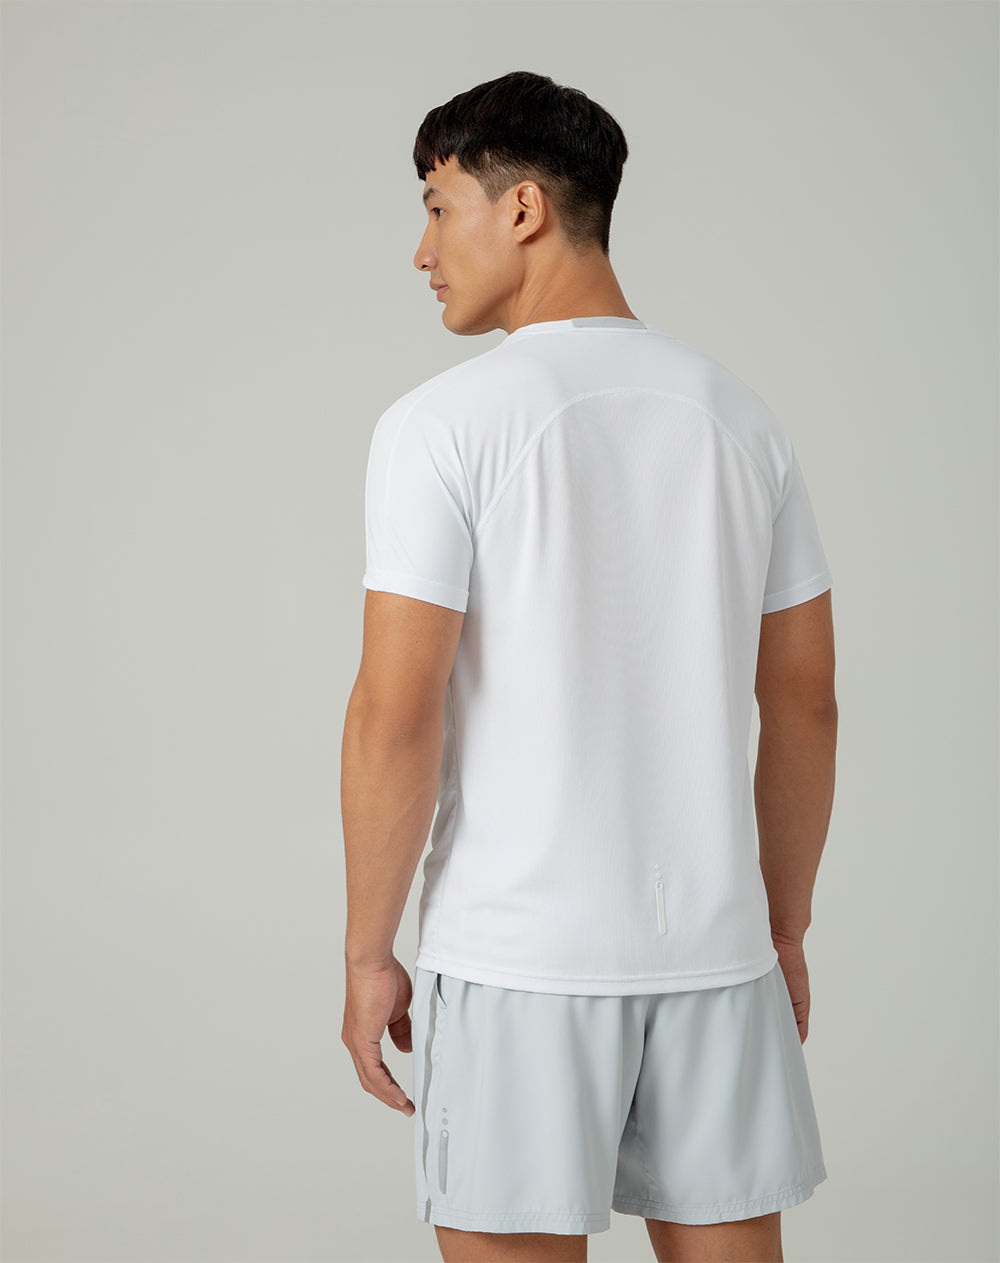 Camiseta regular fit manga corta blanca